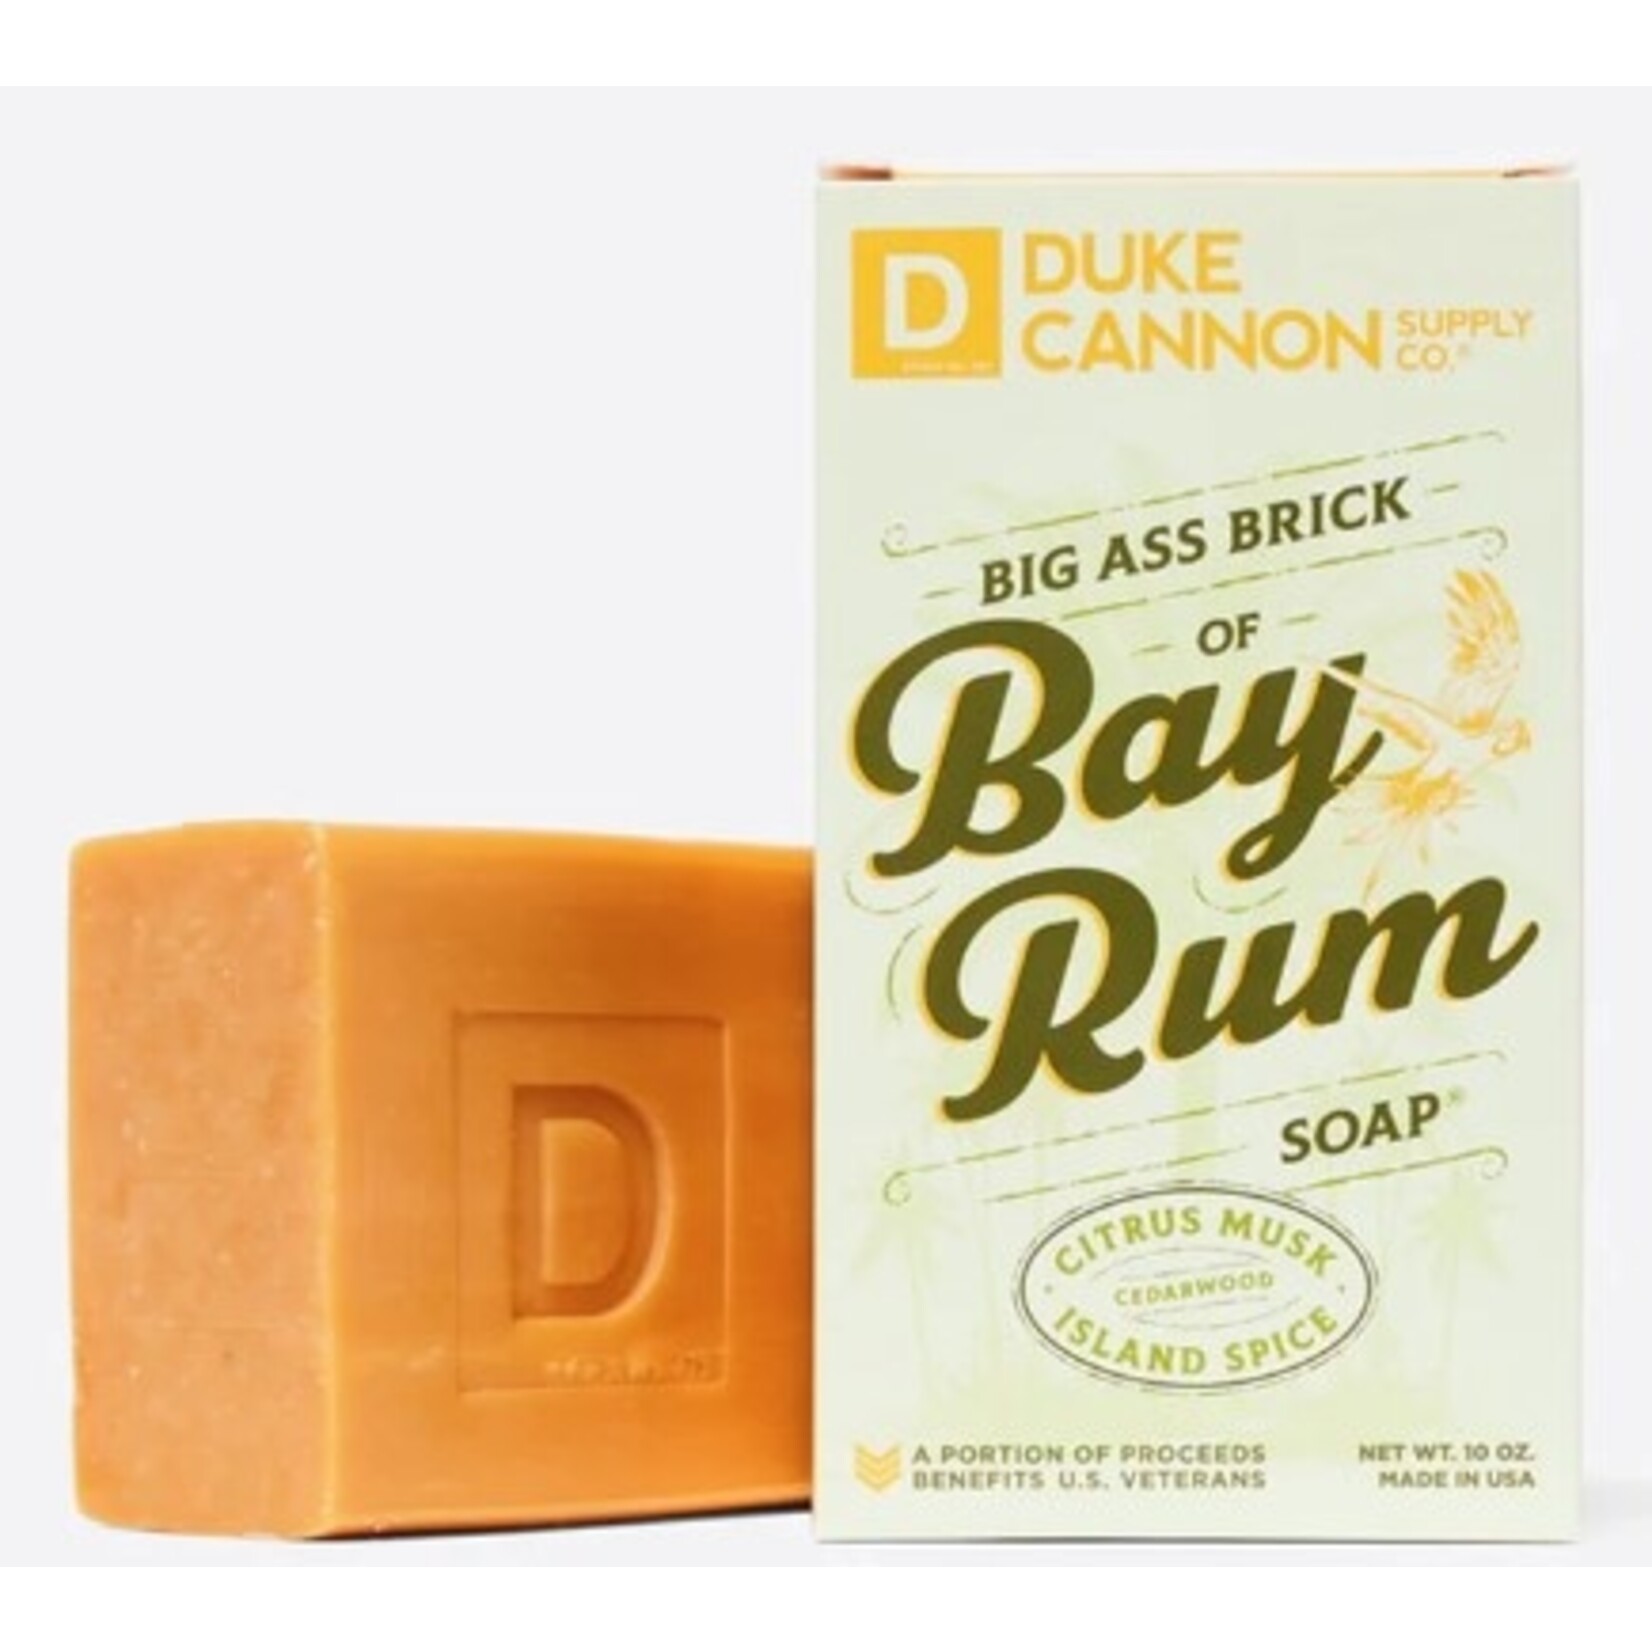 Duke Cannon Duke Cannon Big Ass Brick of Soap Bay Rum - DISCONTINUED